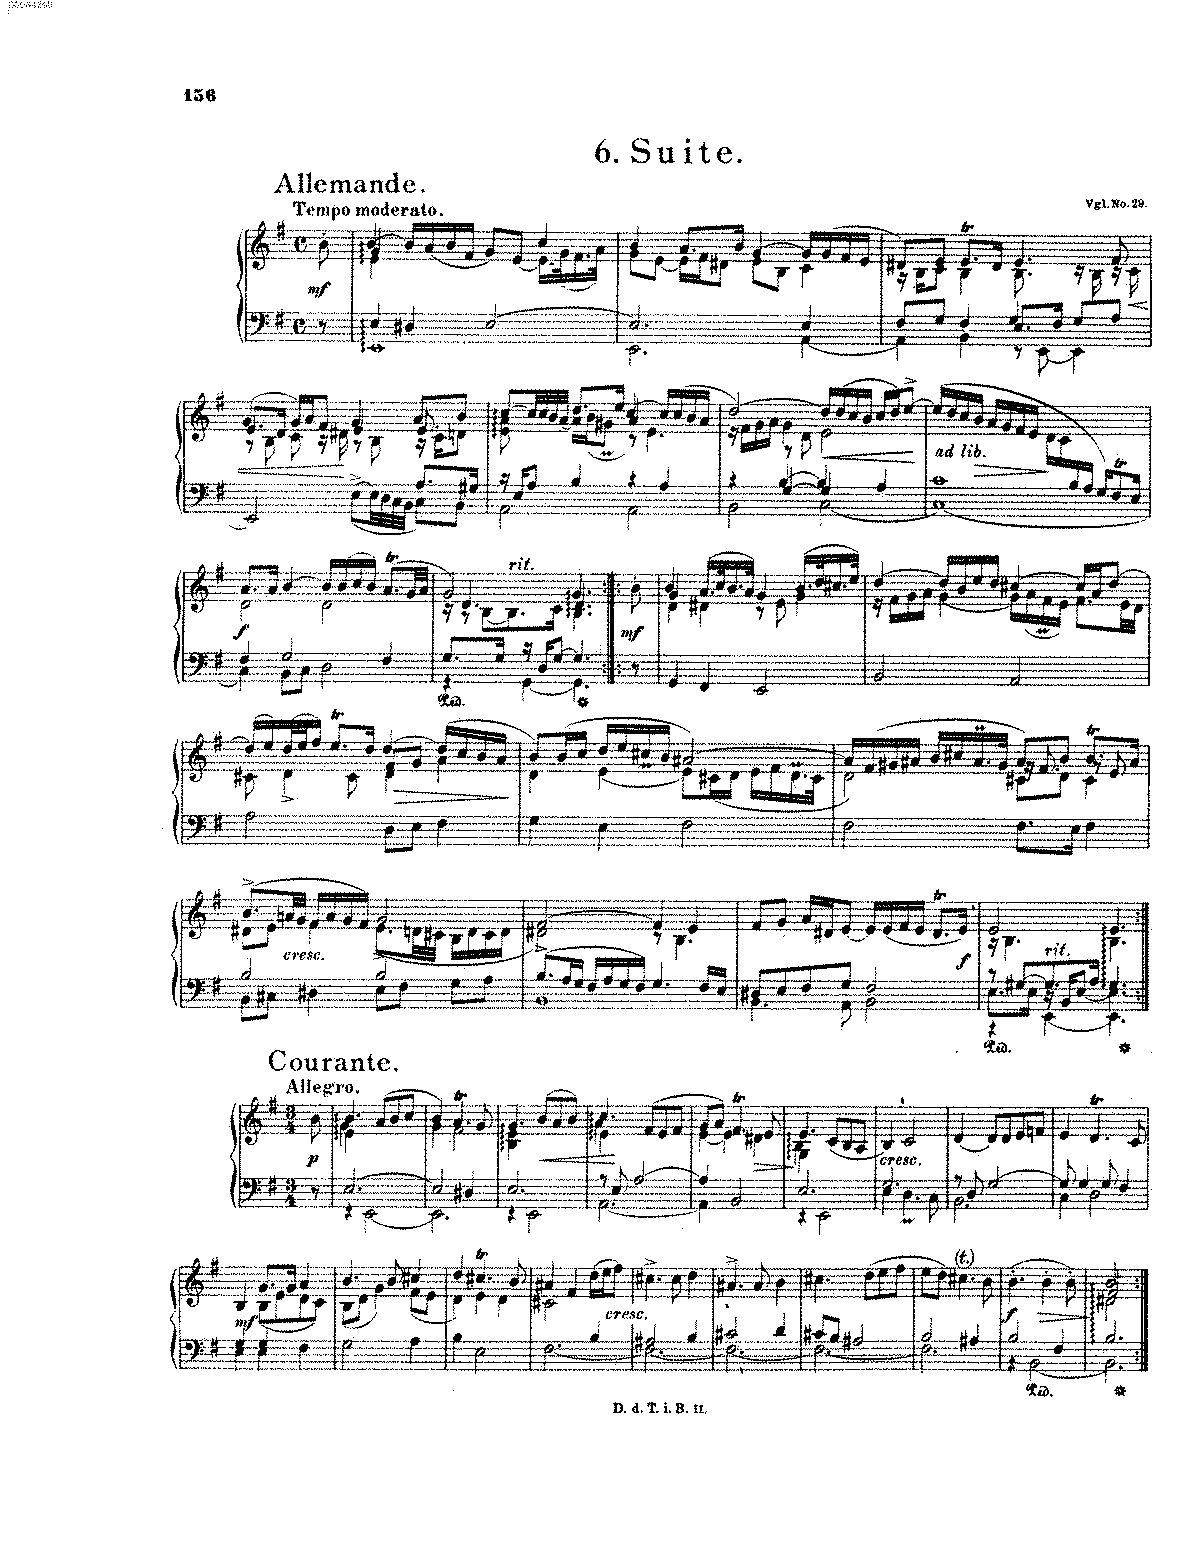 Suite in E minor, P.436 (Pachelbel, Johann) - IMSLP